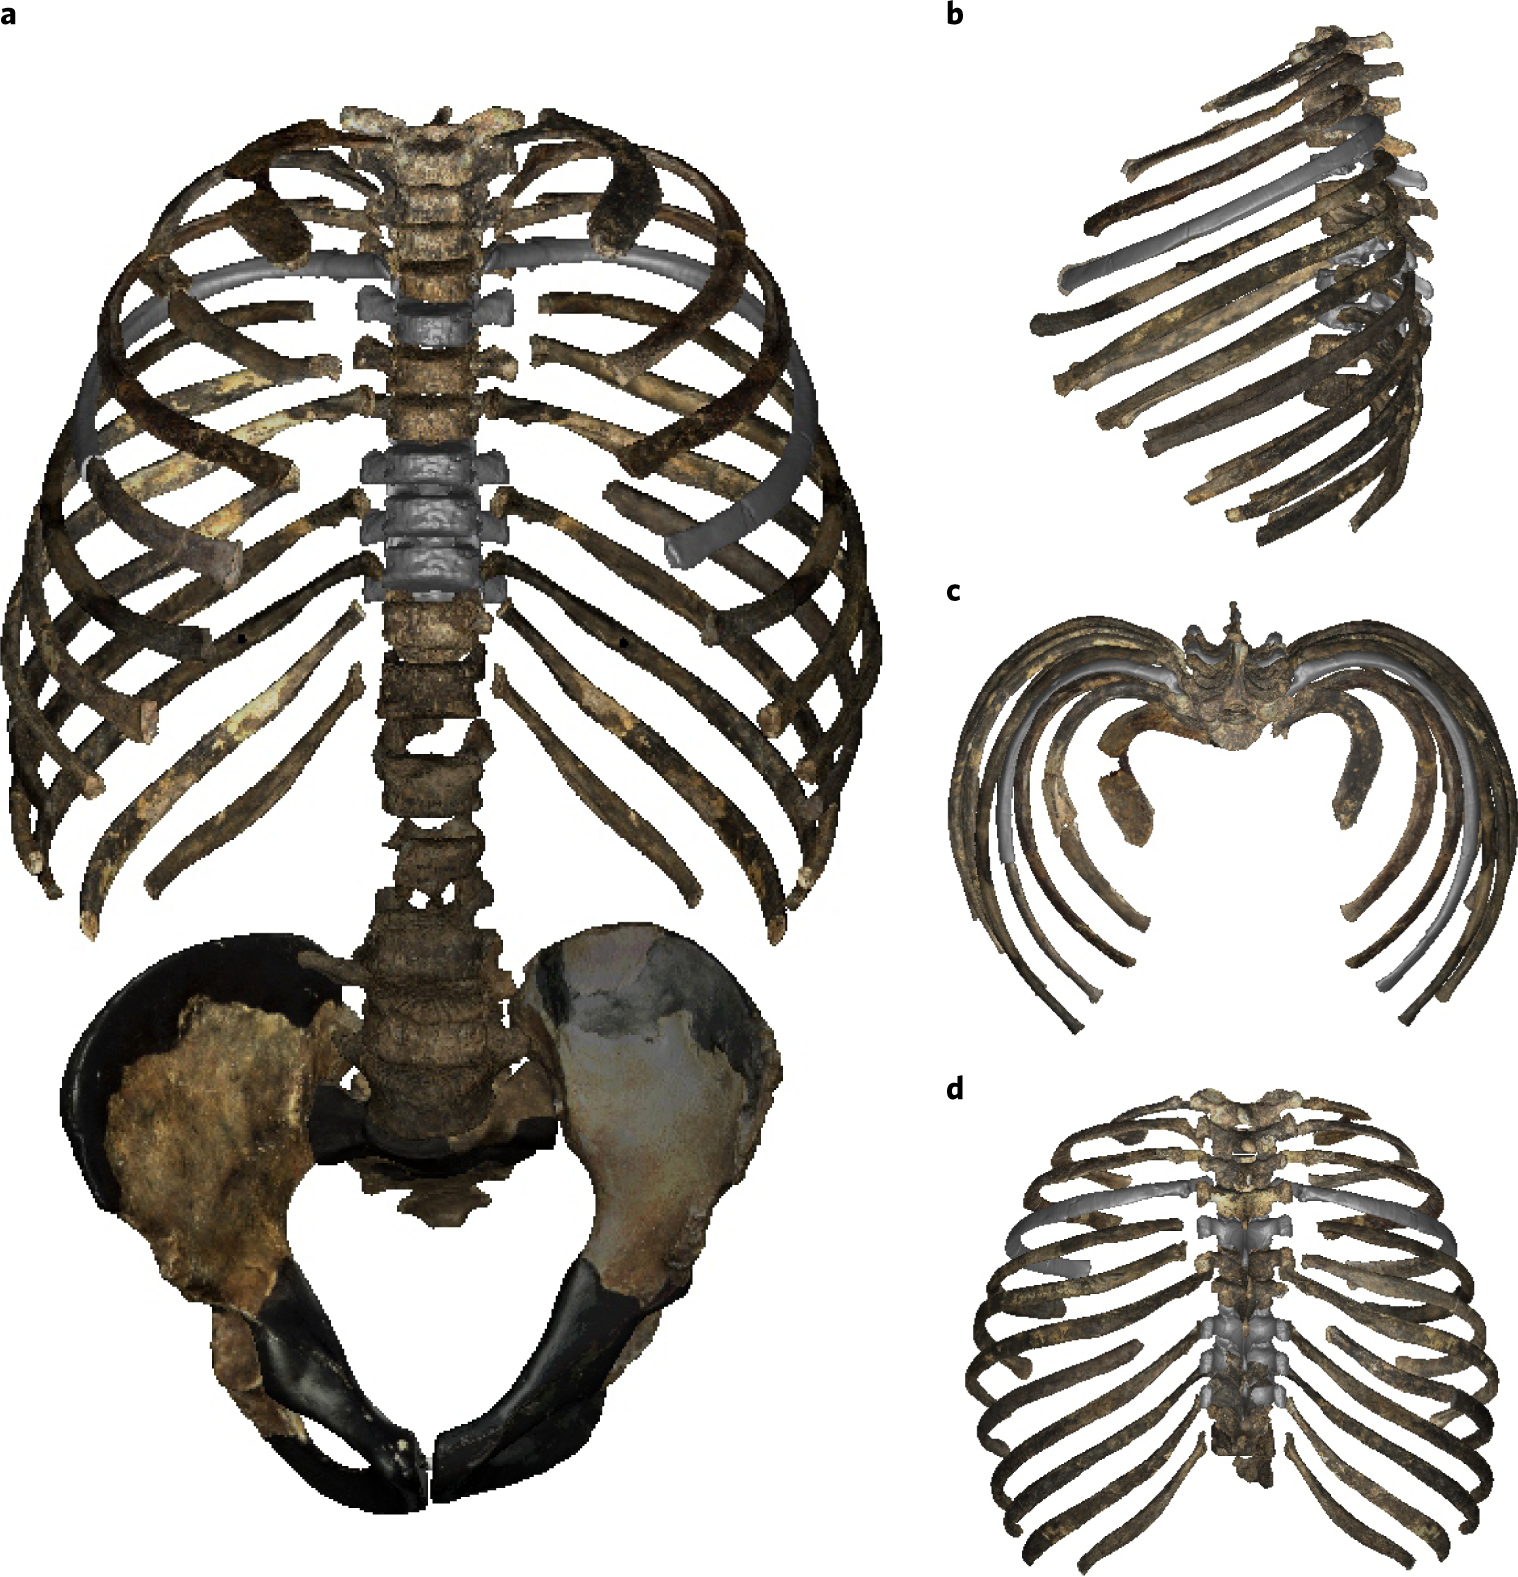 Rib Cage Anatomy In Homo Erectus Suggests A Recent Evolutionary Origin Of Modern Human Body Shape Nature Ecology Evolution